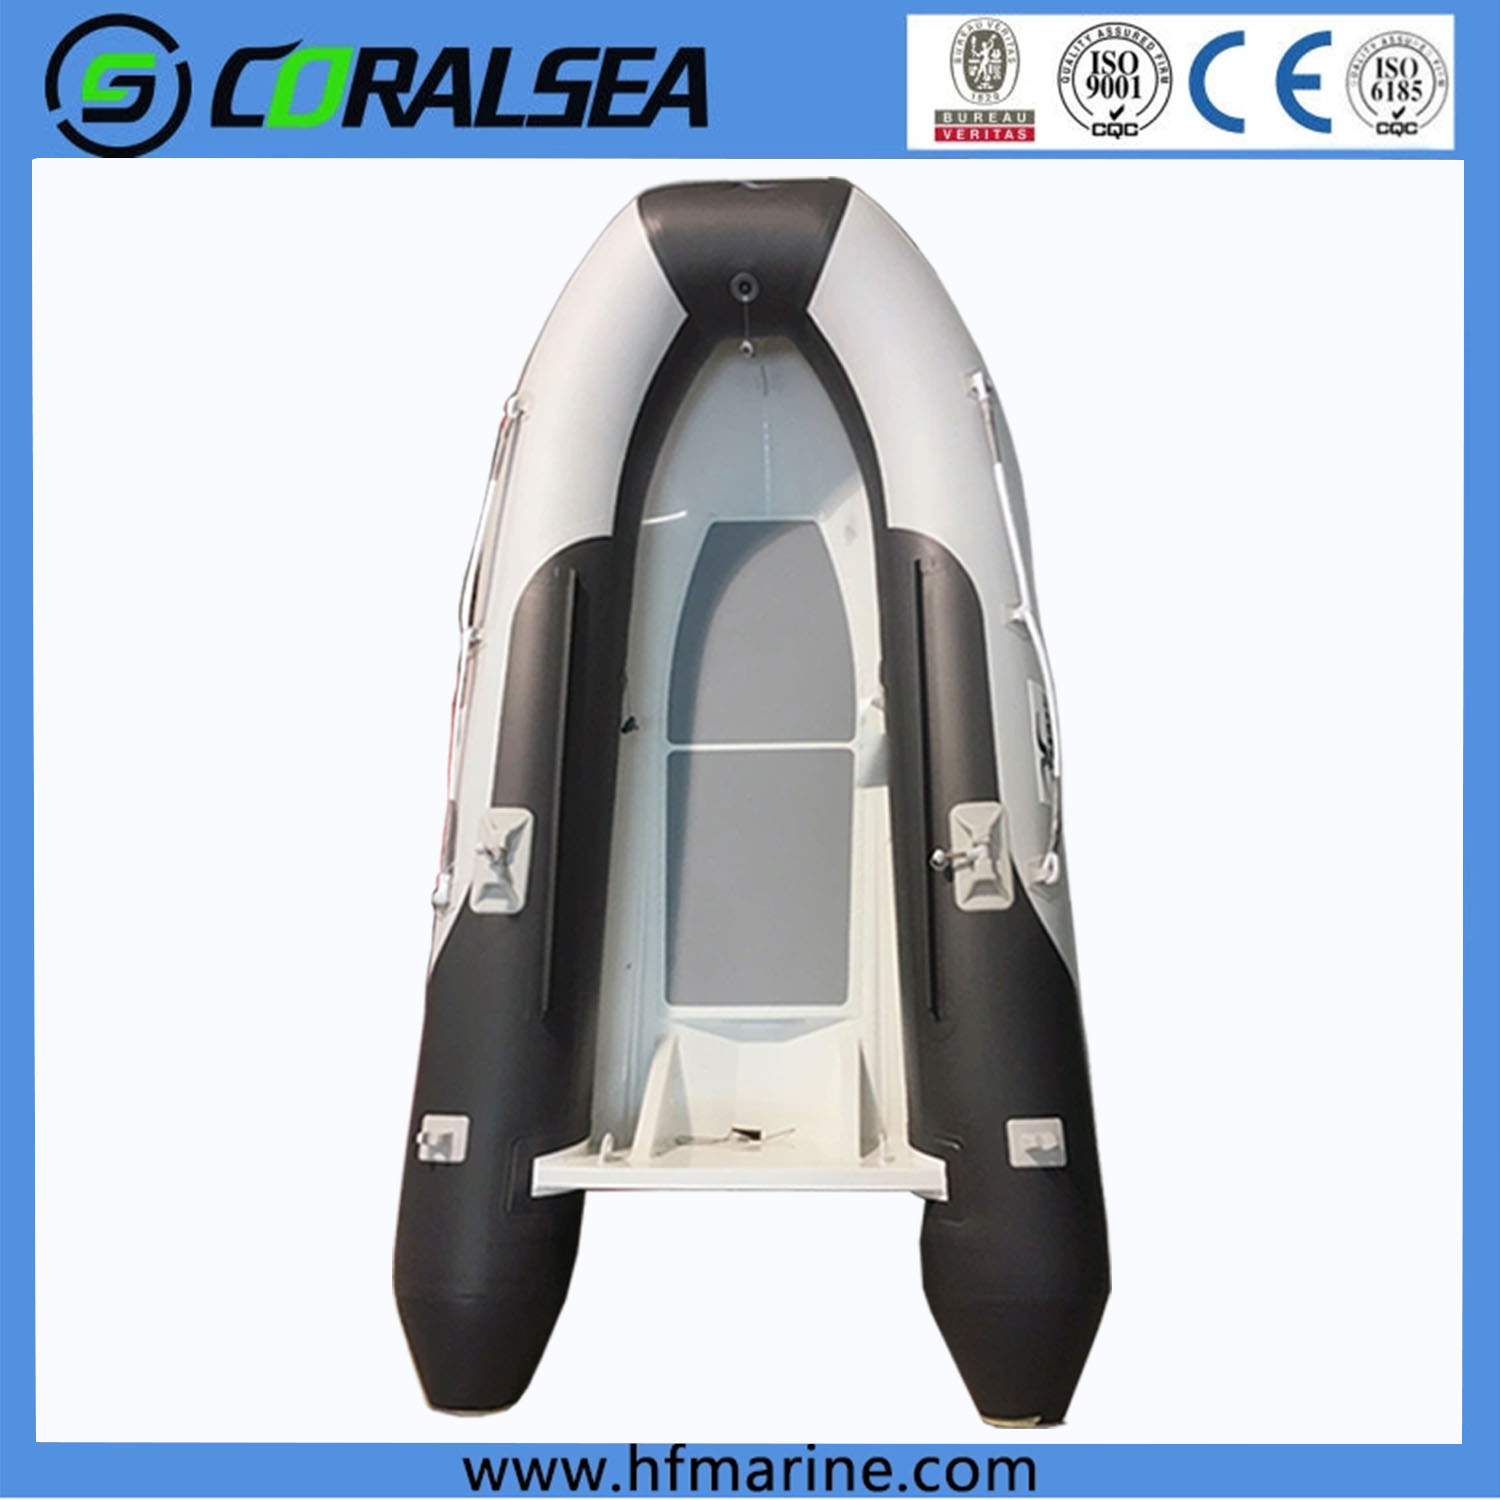 Wholesale Double-layer deep-V aluminum hull RIB inflatable boat